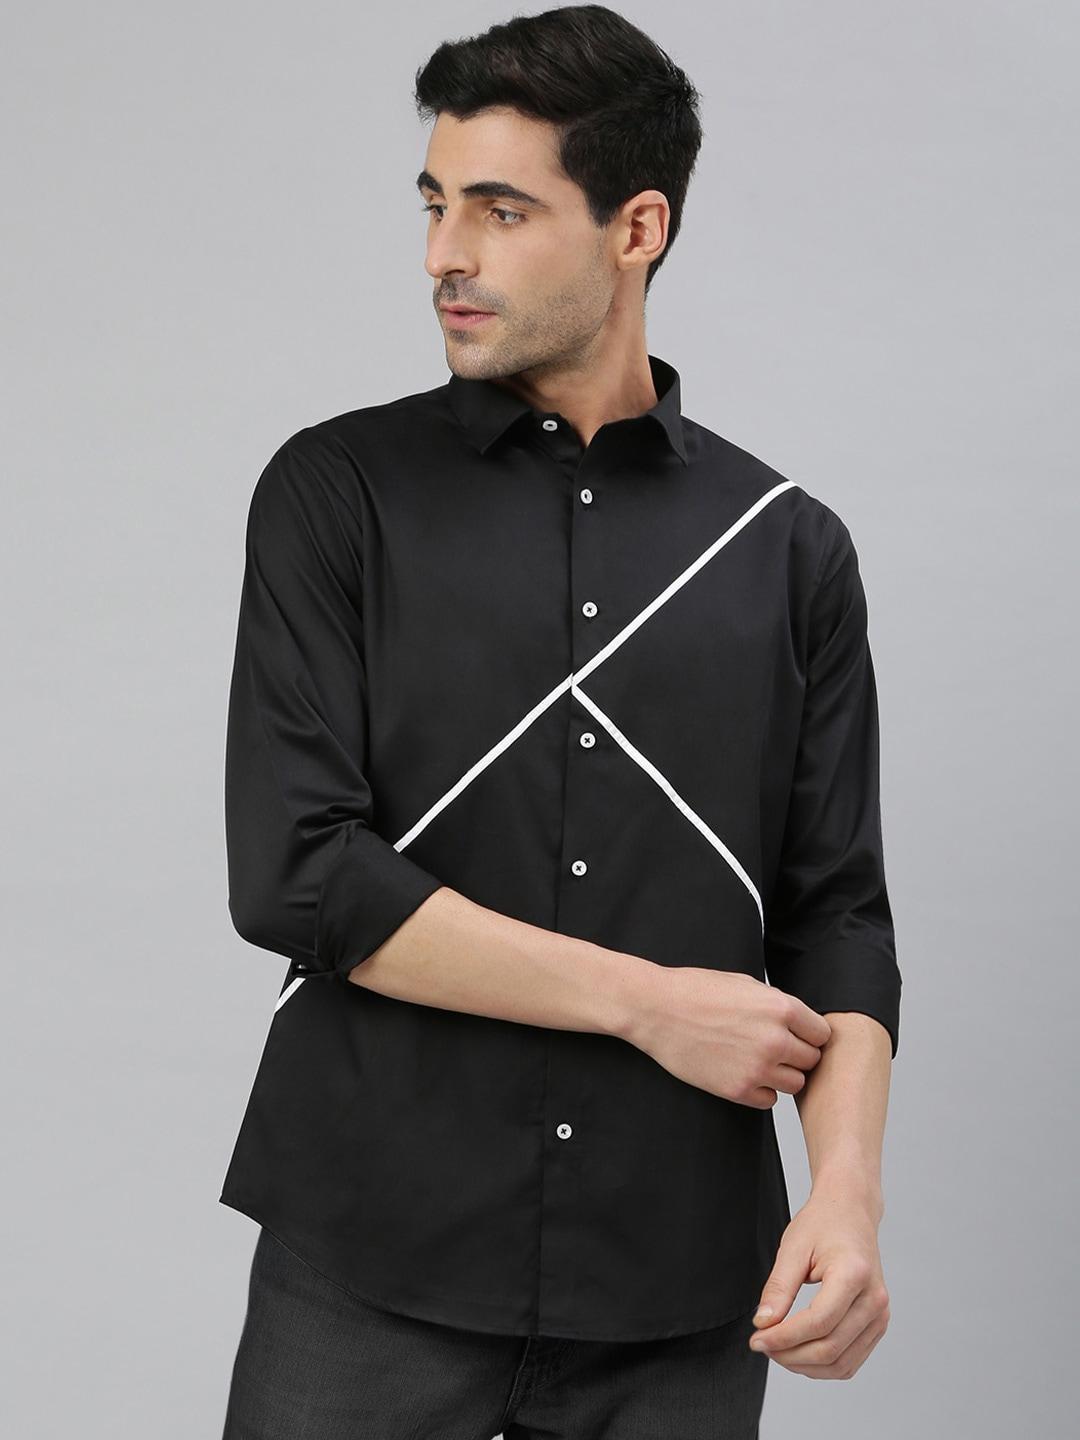 mr-button-men-black-smart-slim-fit-printed-casual-shirt